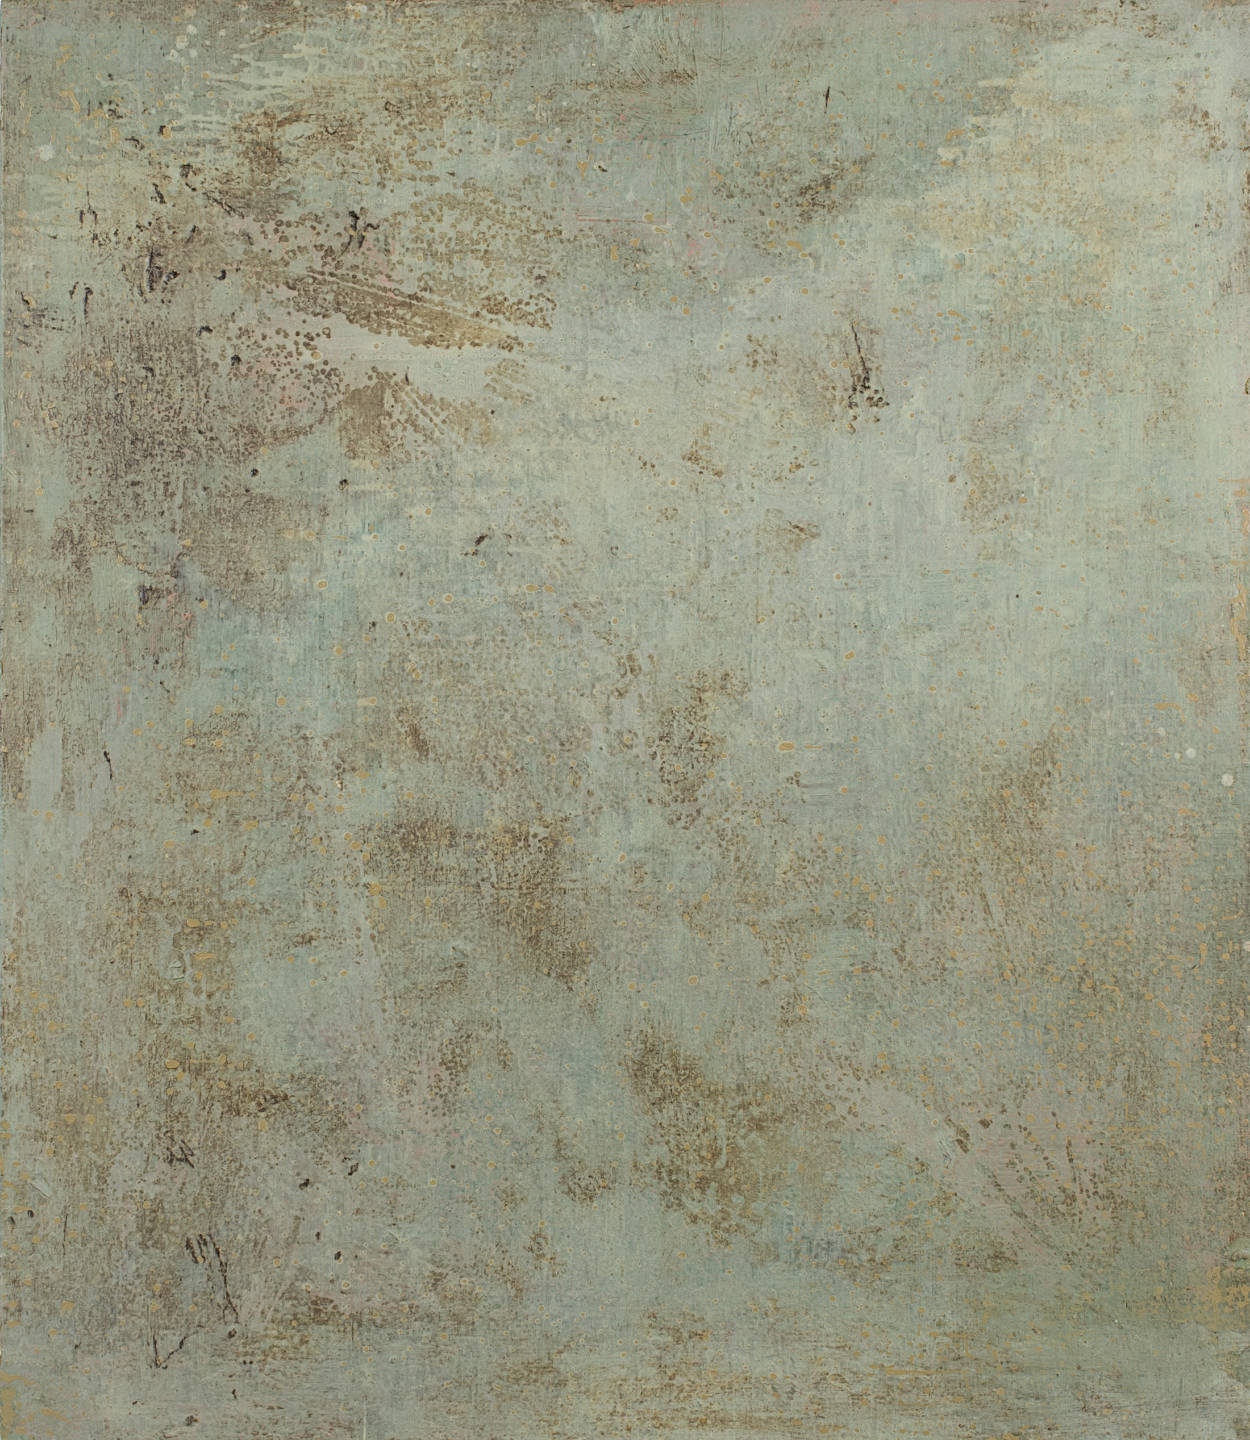 Bancha, 2023
48 x 42 ins, mixed media on canvas